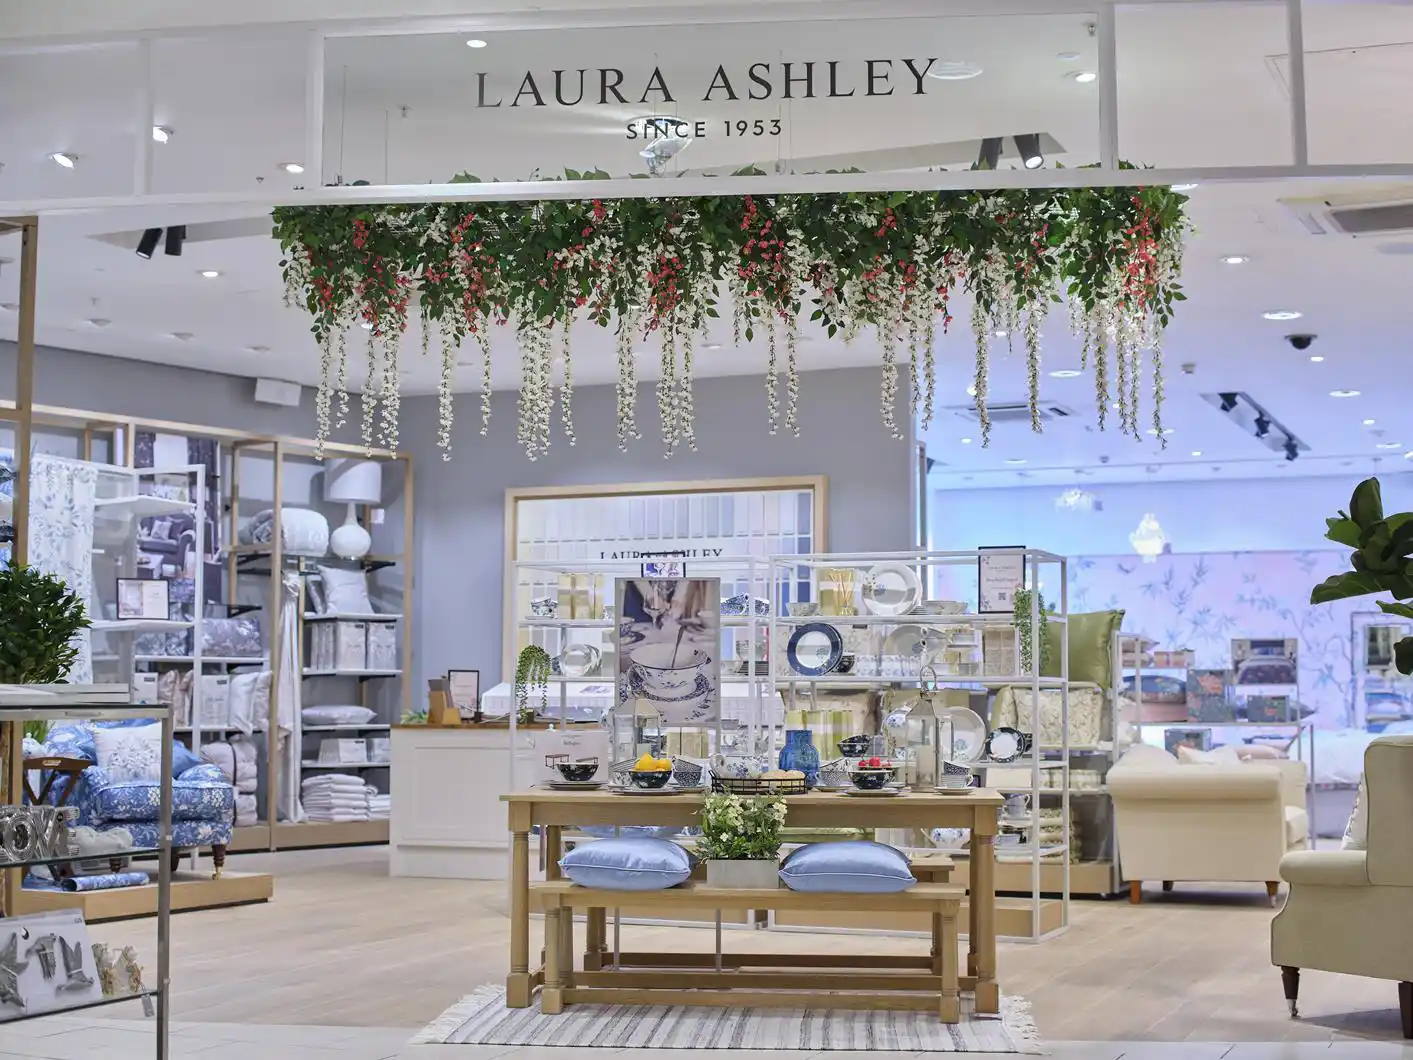 Laura Ashley Store Displays